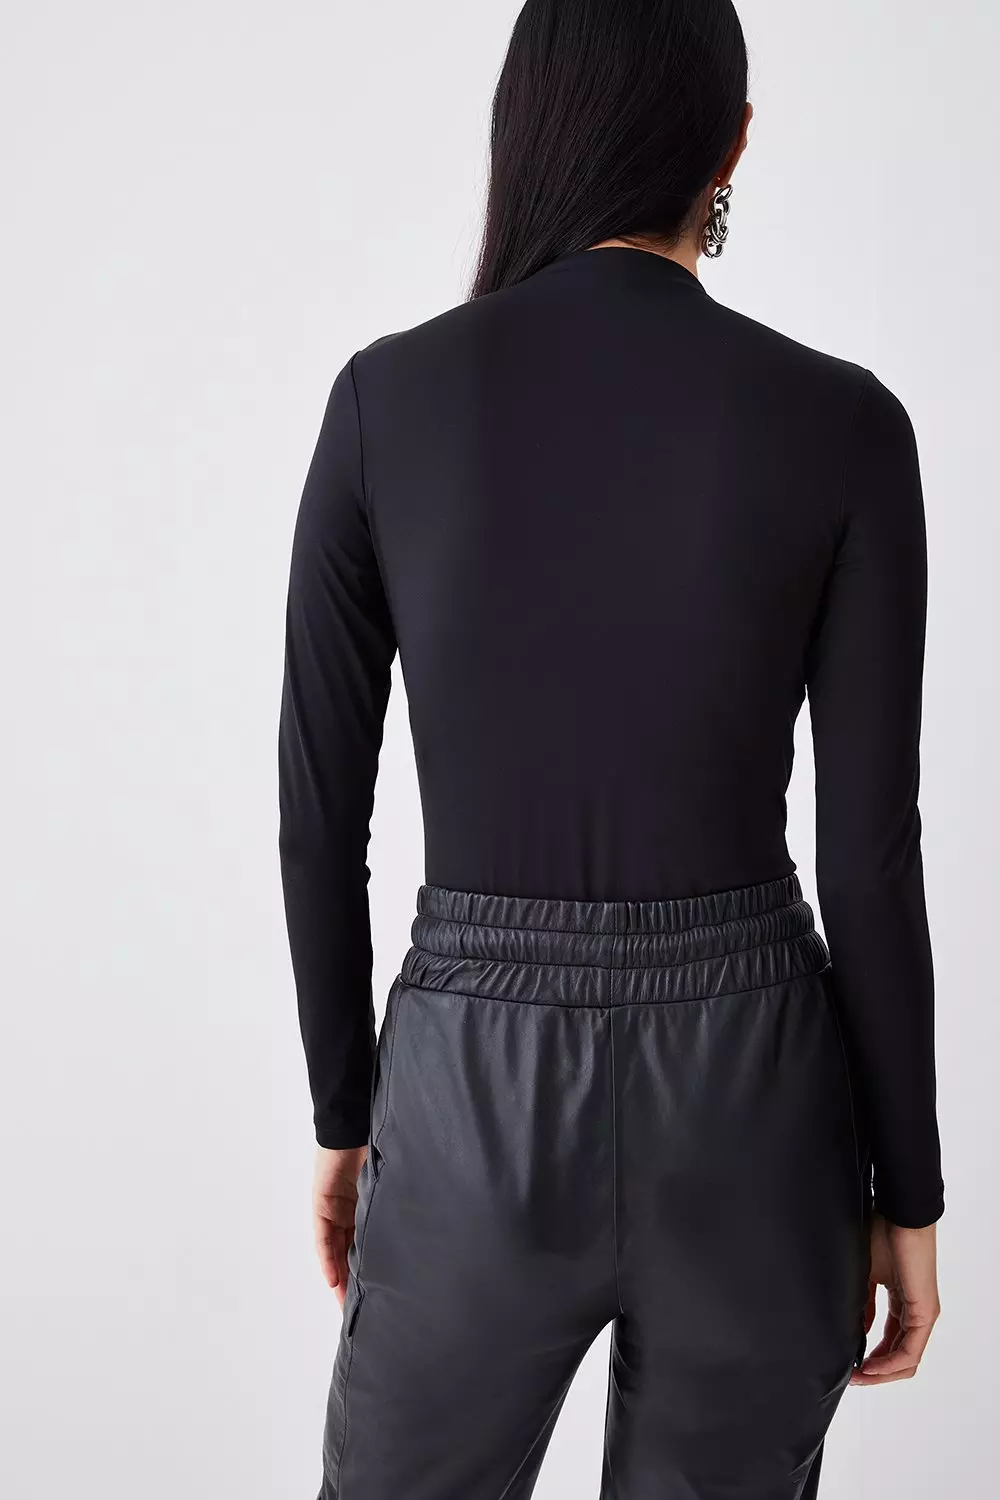 Black Slinky Cut Out Long Sleeve Thong Bodysuit